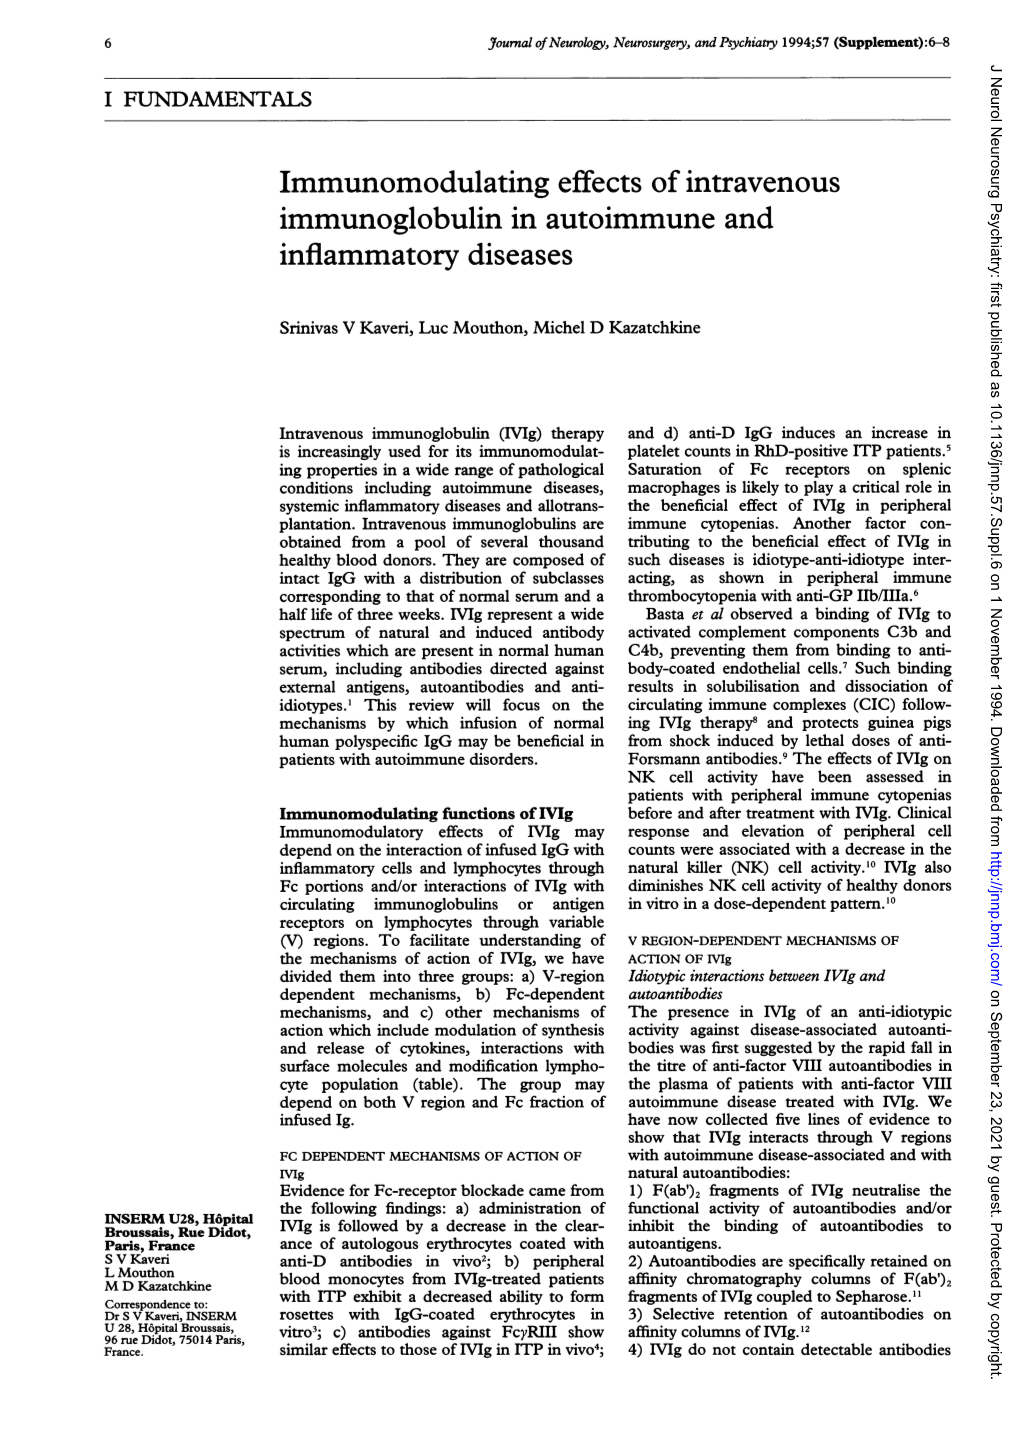 Immunomodulating Effects of Intravenous Immunoglobulin in Autoimmune and Inflammatory Diseases